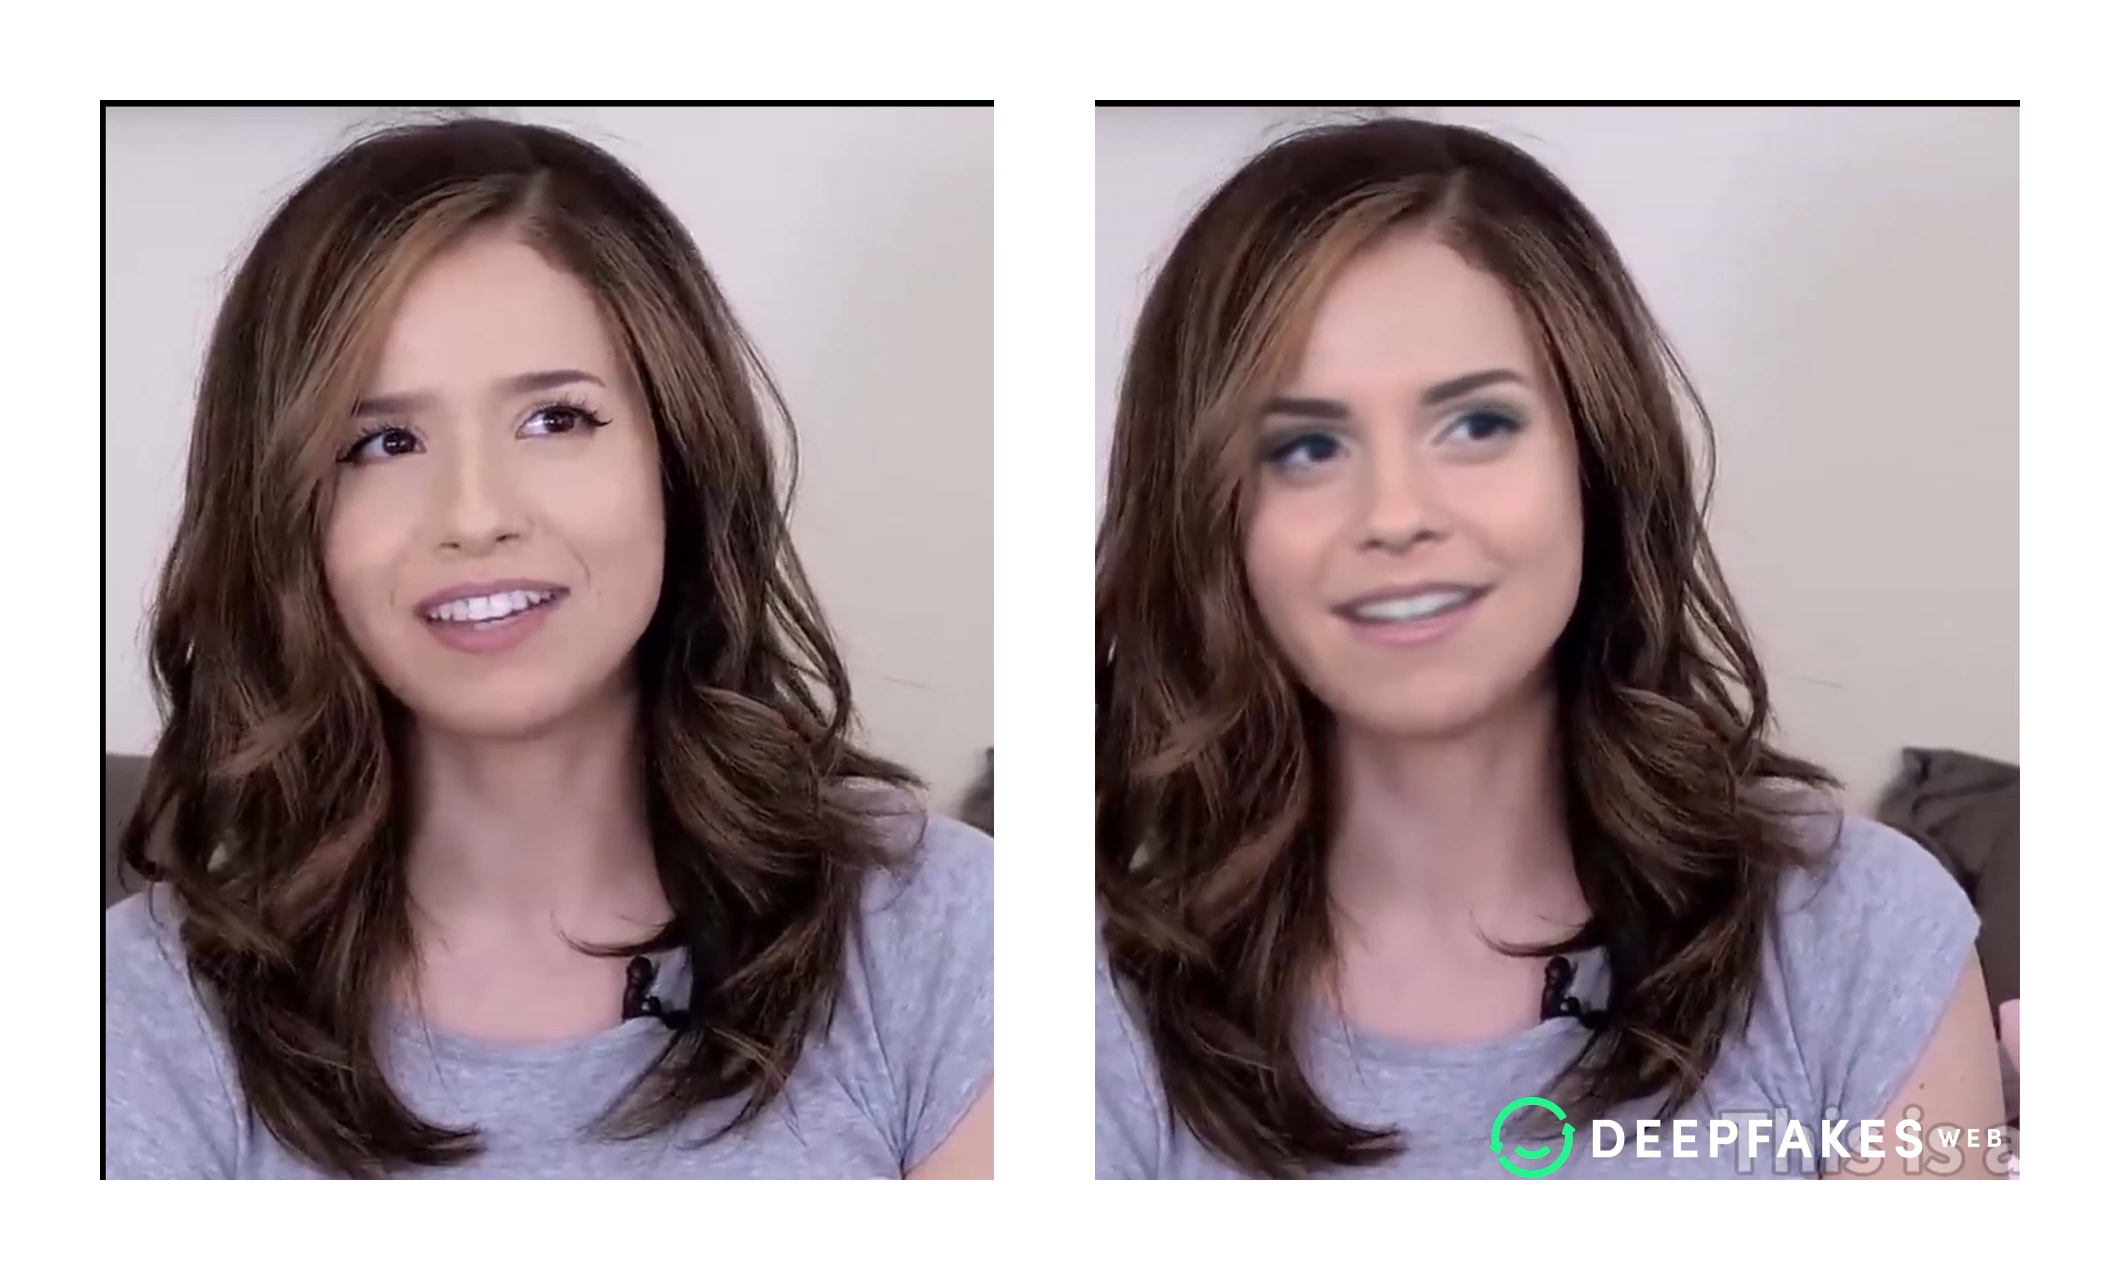 How to Make an Emma Watson Deepfake